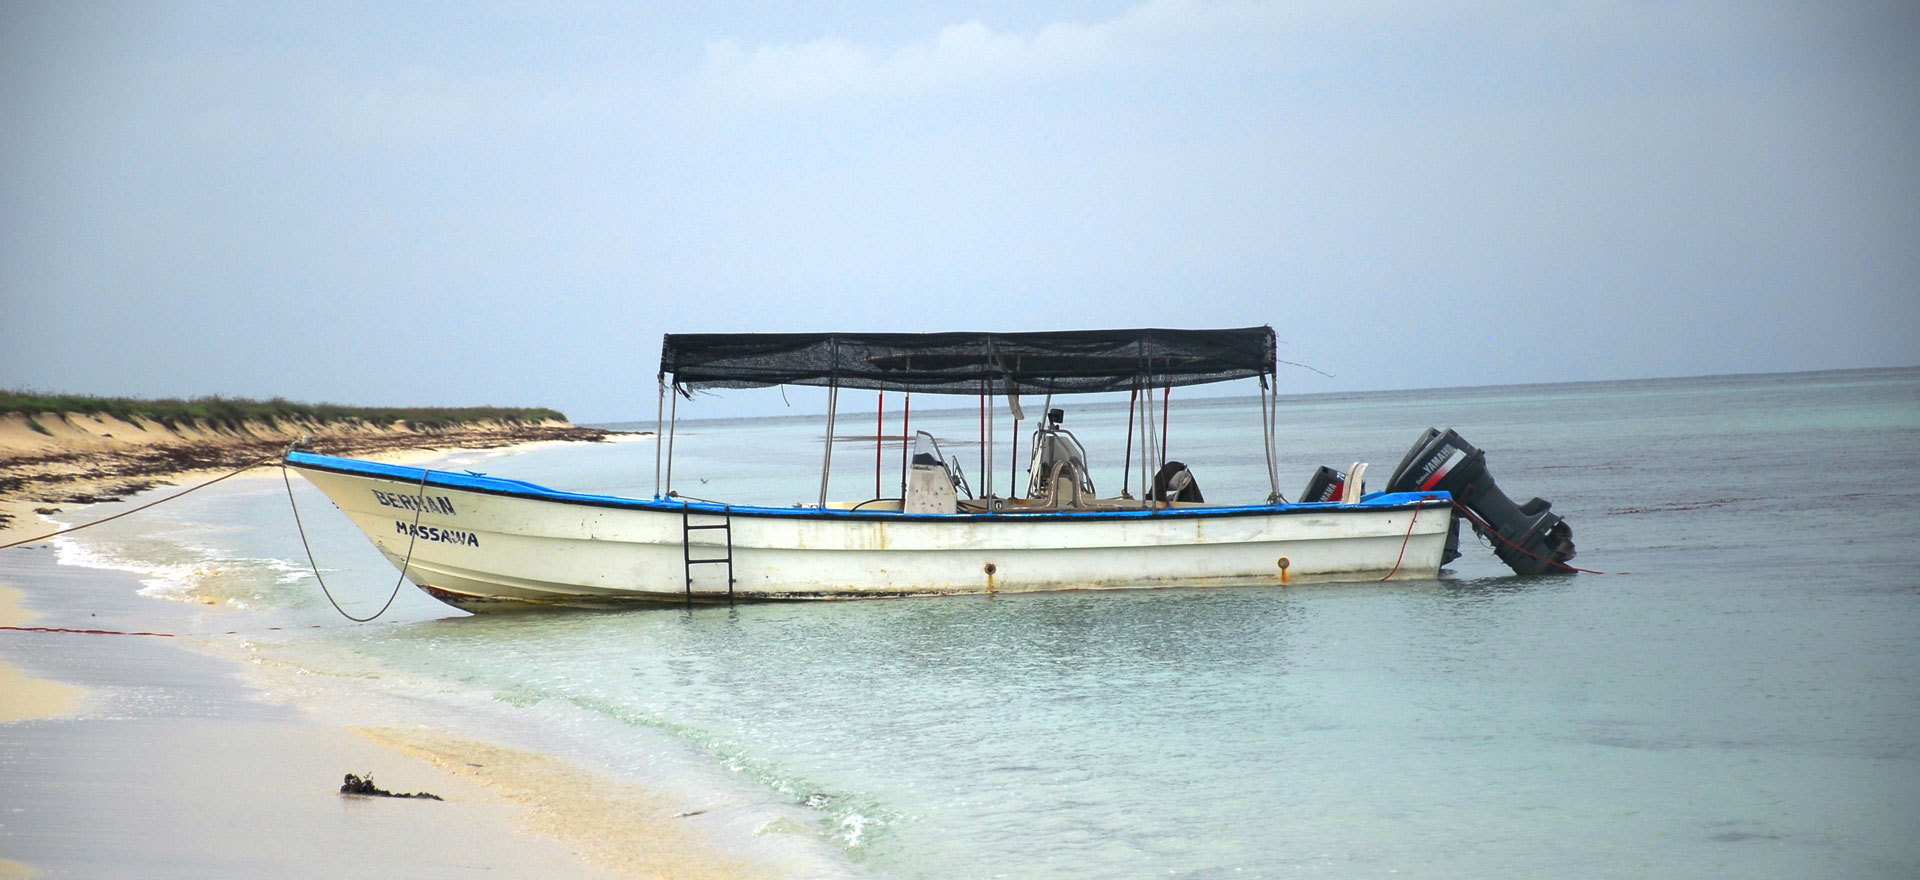 Boat on the shores of Massawa - Eritrea holidays and tours